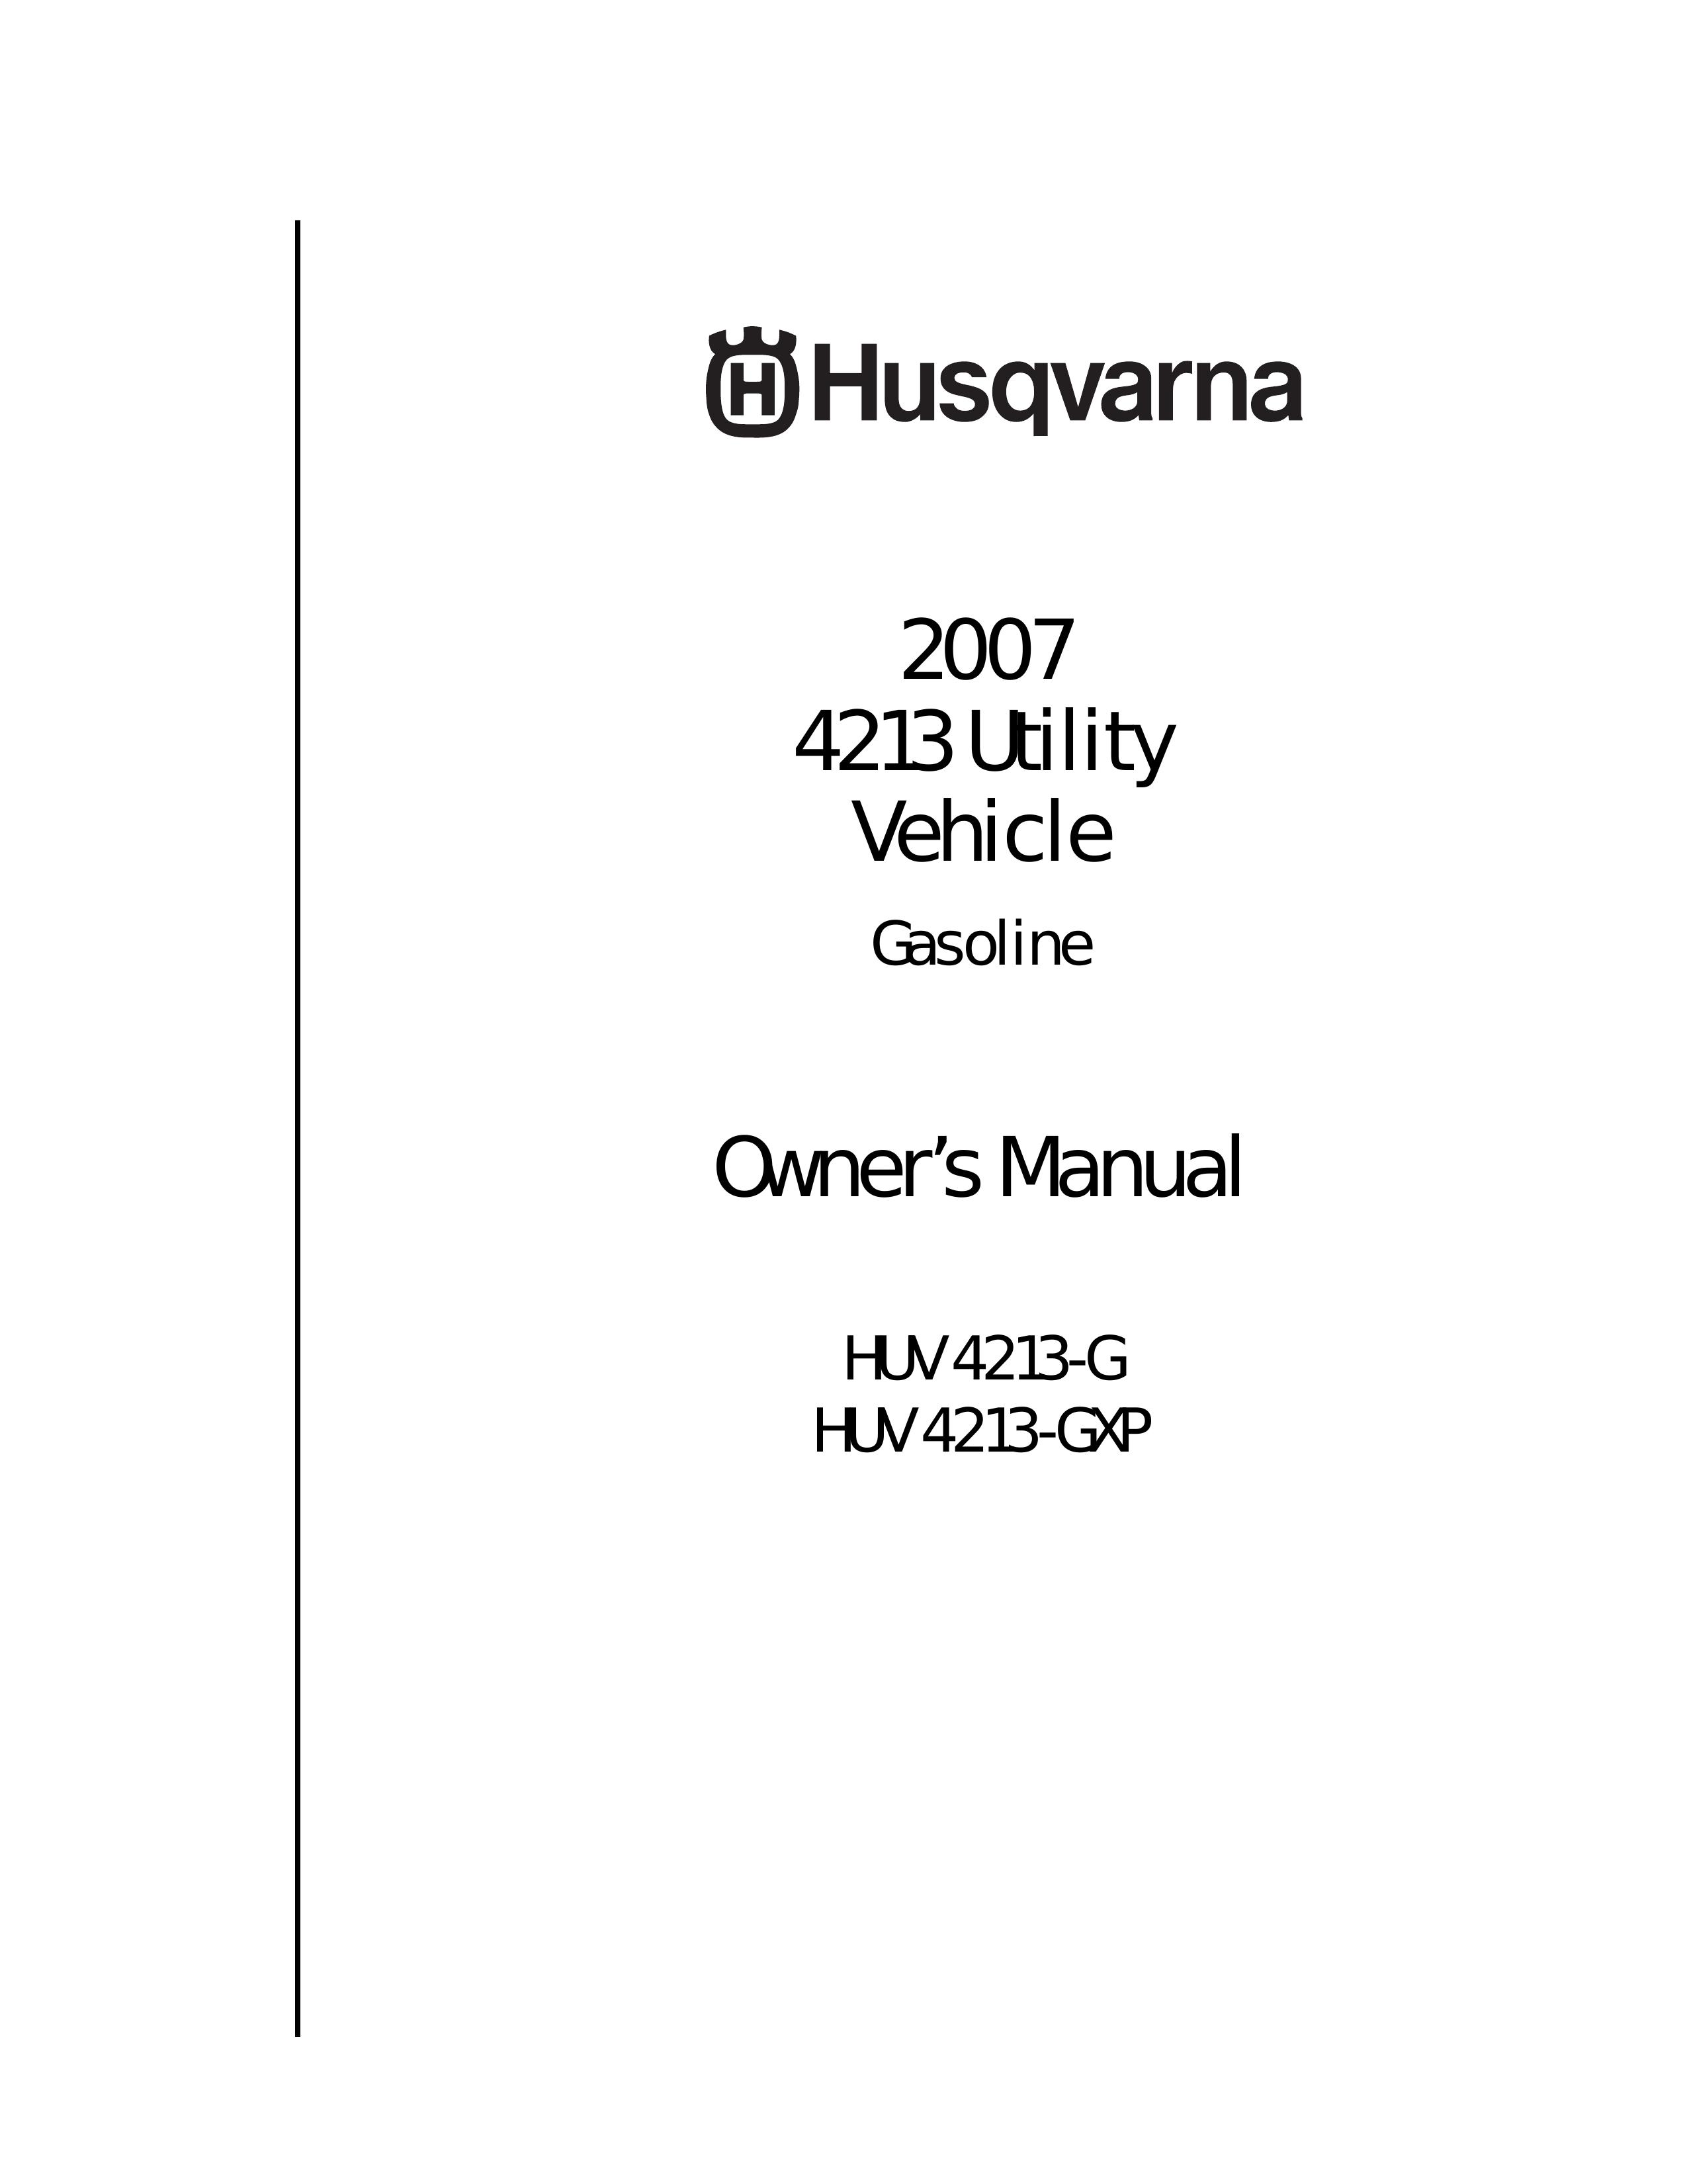 Husqvarna HUV 4213-GXP Utility Vehicle User Manual